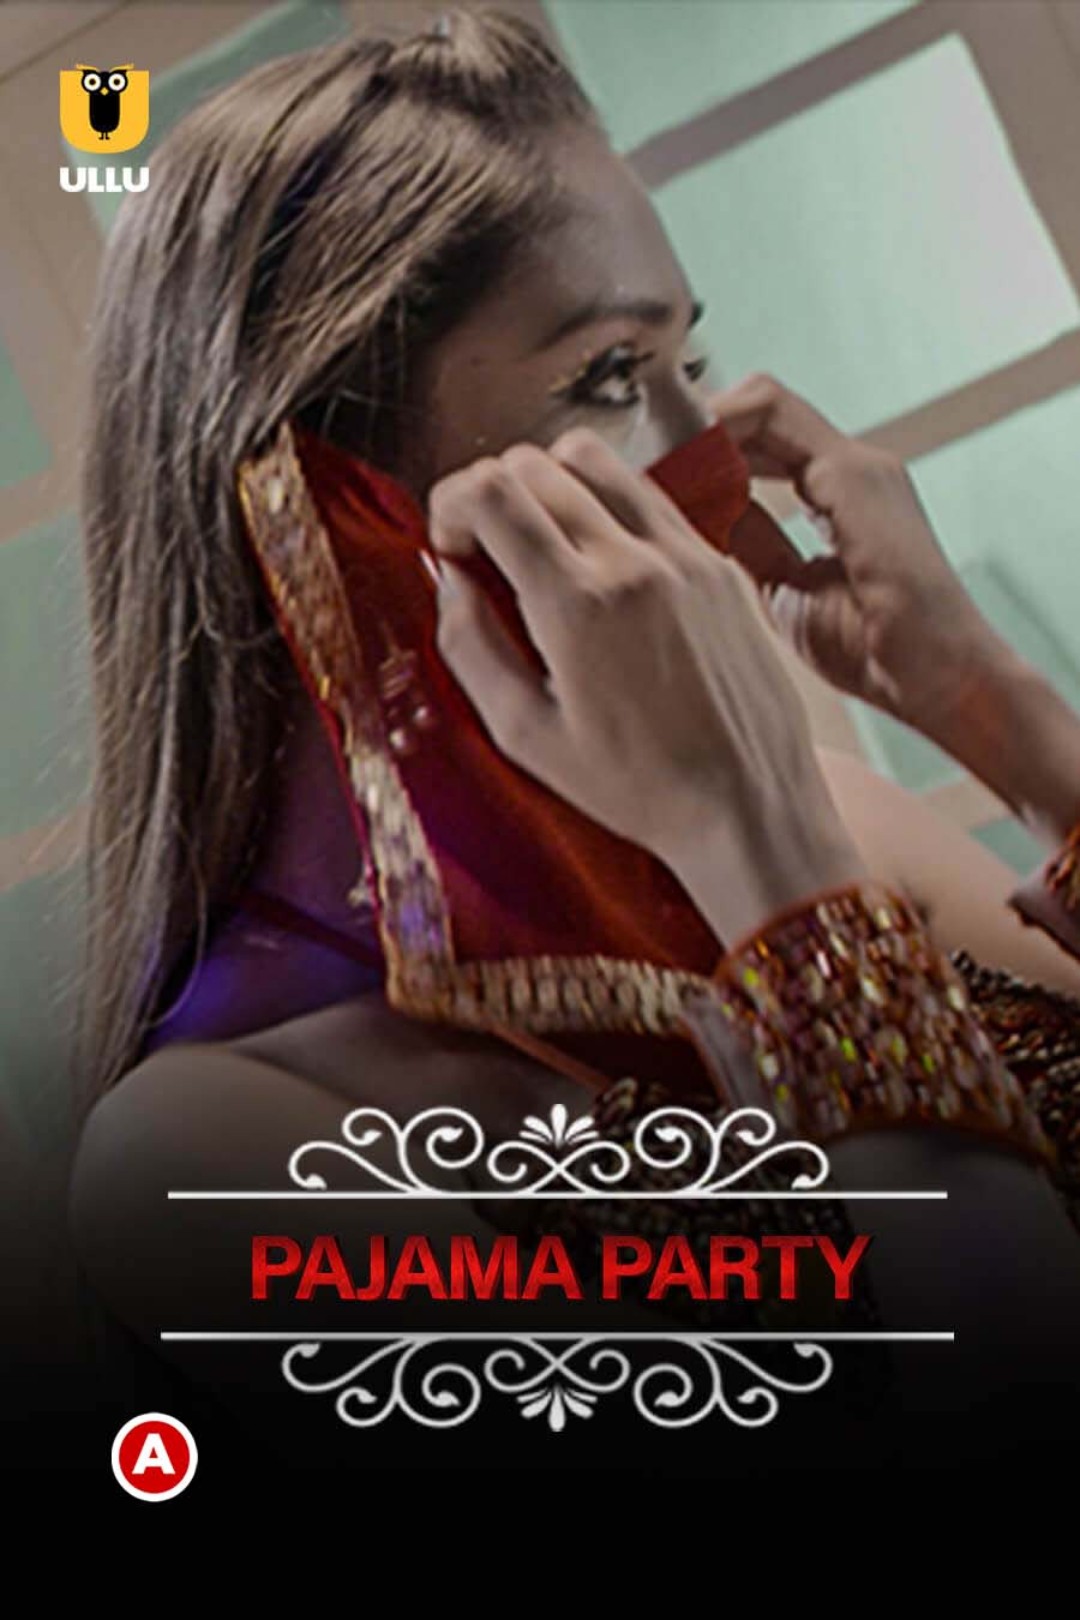 Pajama Party (Charmsukh) (2019) 1080p HDRip Ullu Hindi Web Series [360MB]